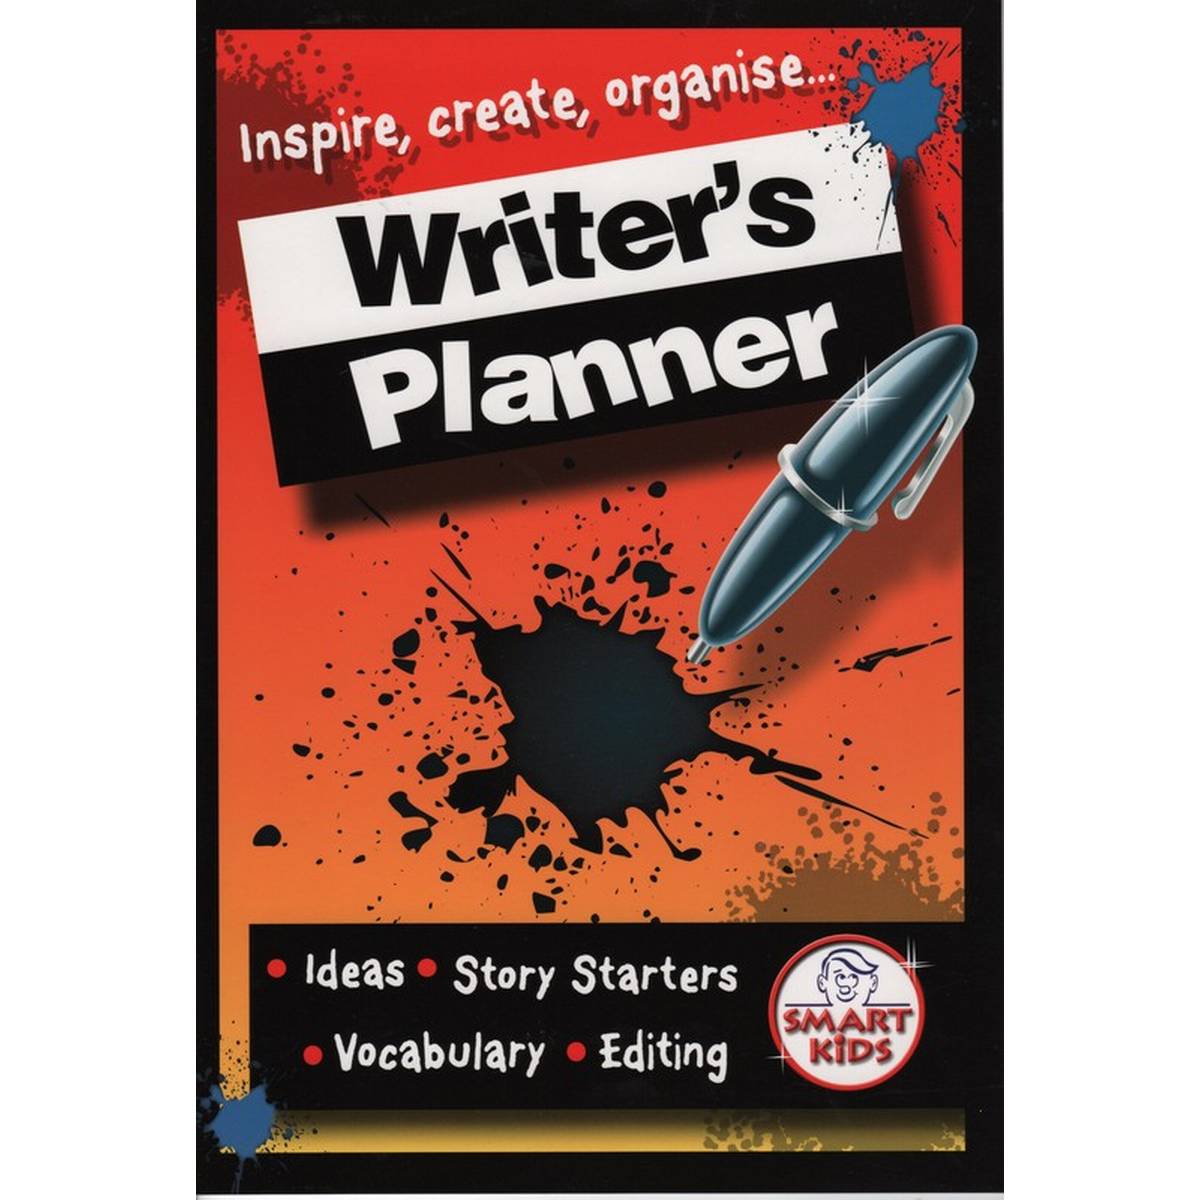 Writers Planner (single)